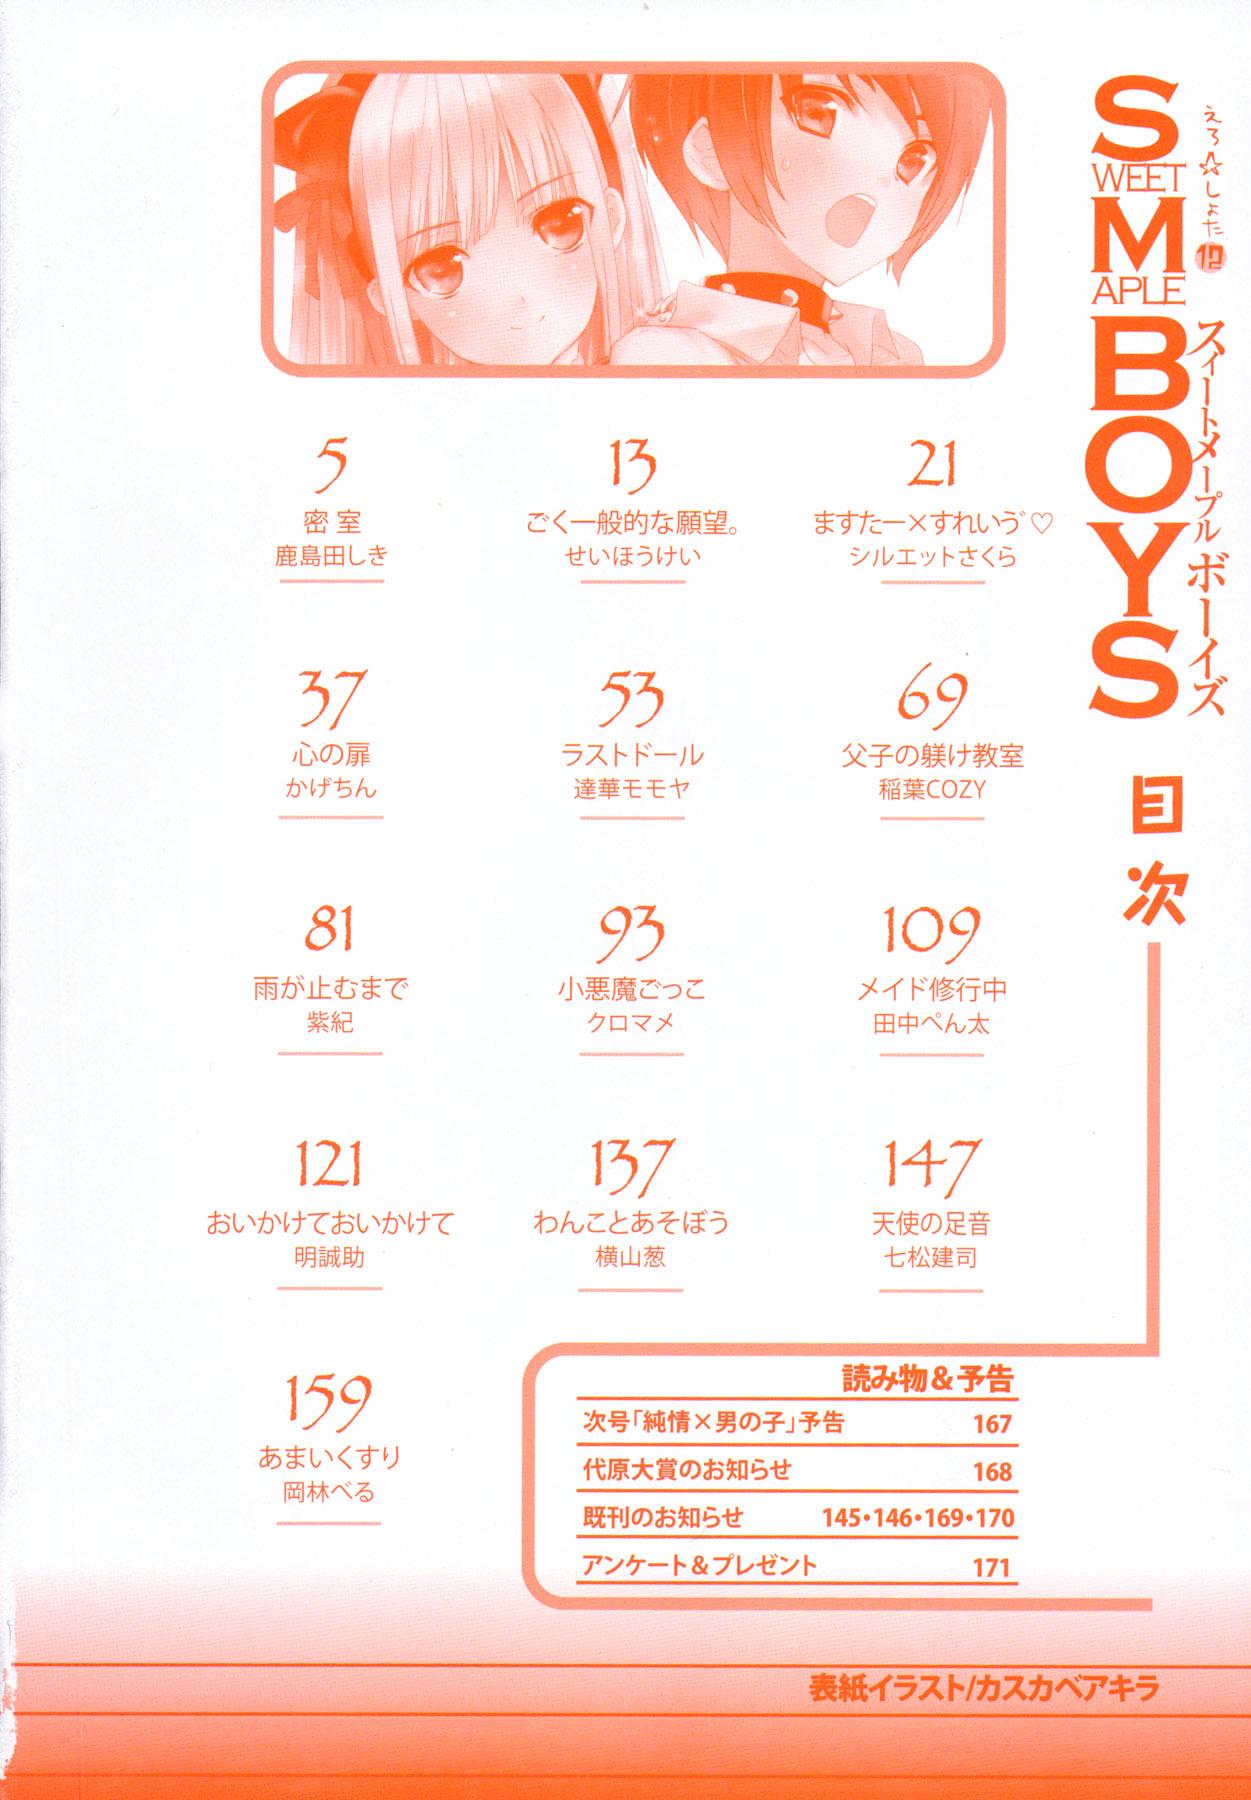 Amateur Ero Shota 12 - Sweet Maple Boys Boy Fuck Girl - Page 3